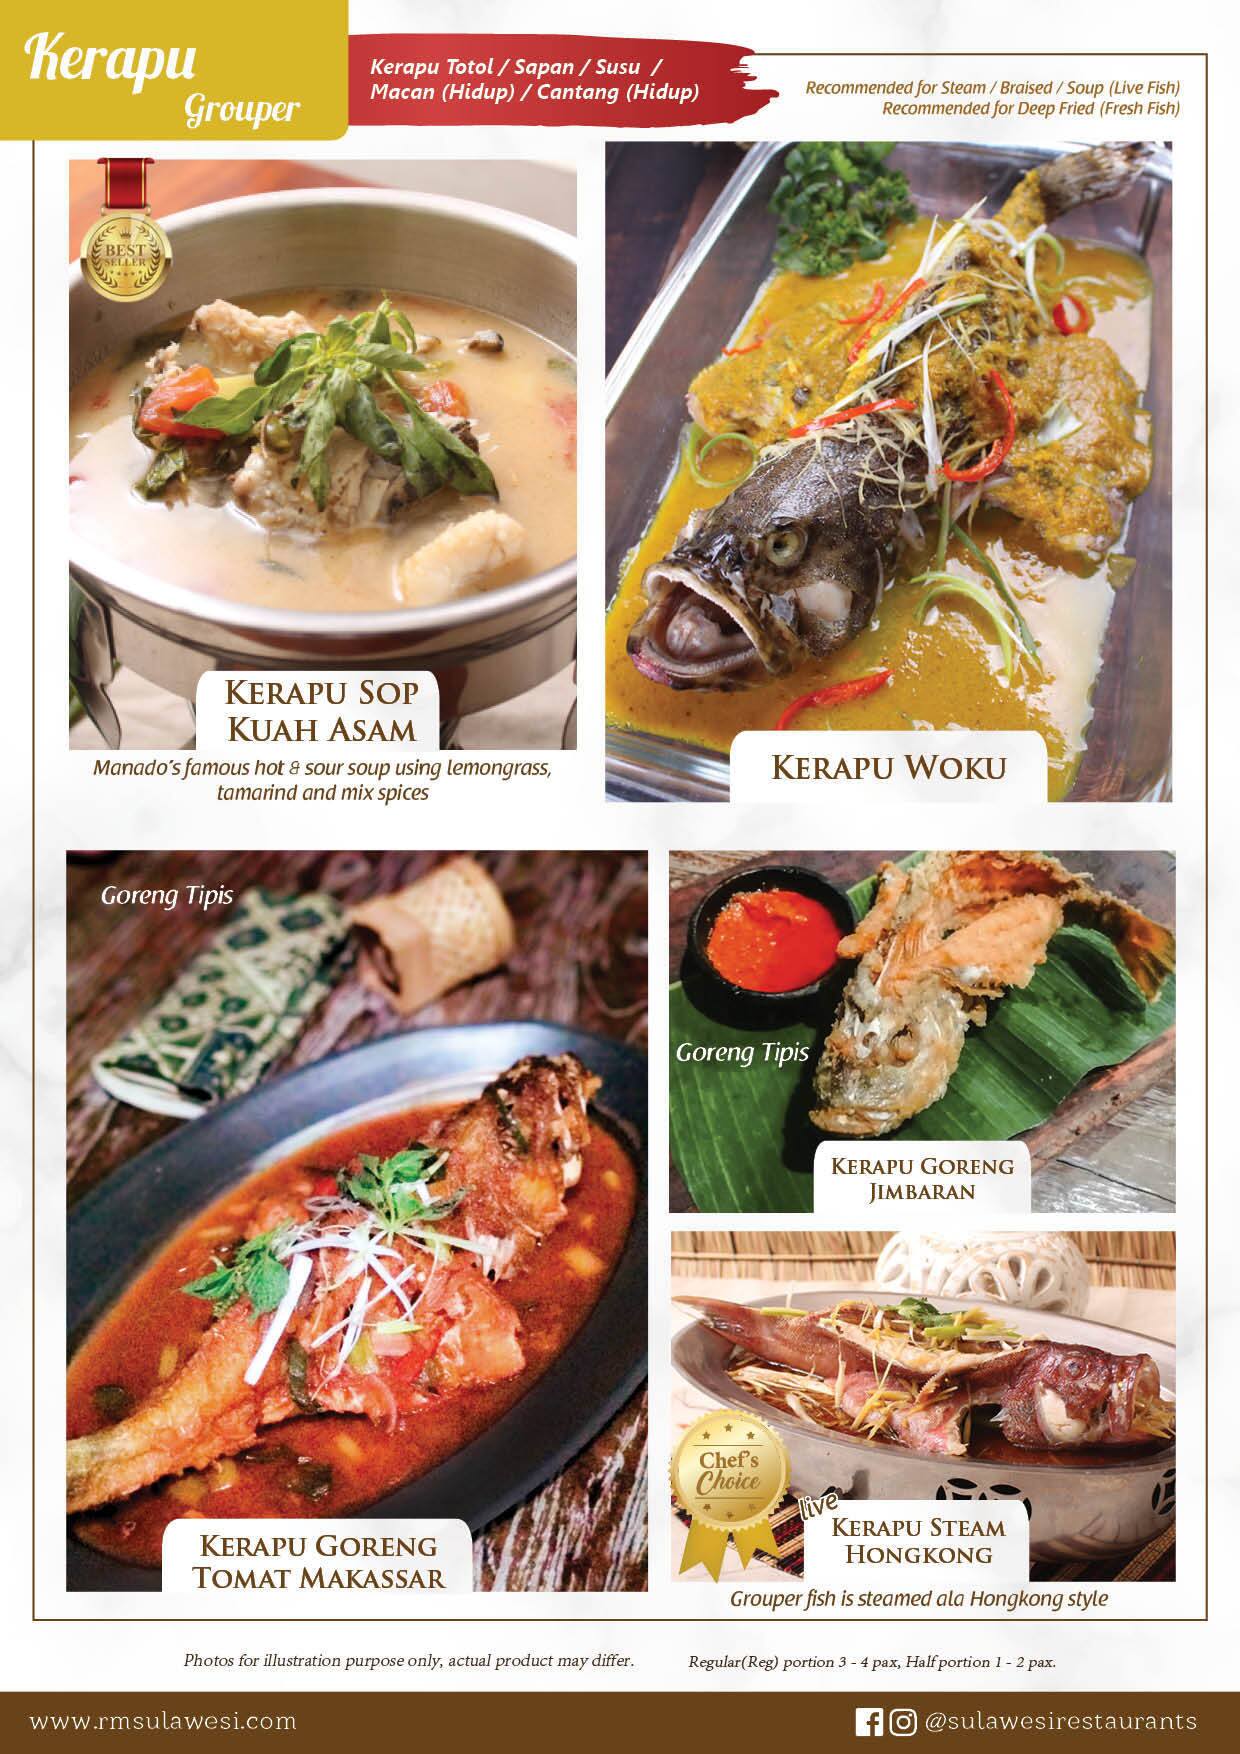 Awet thai seafood